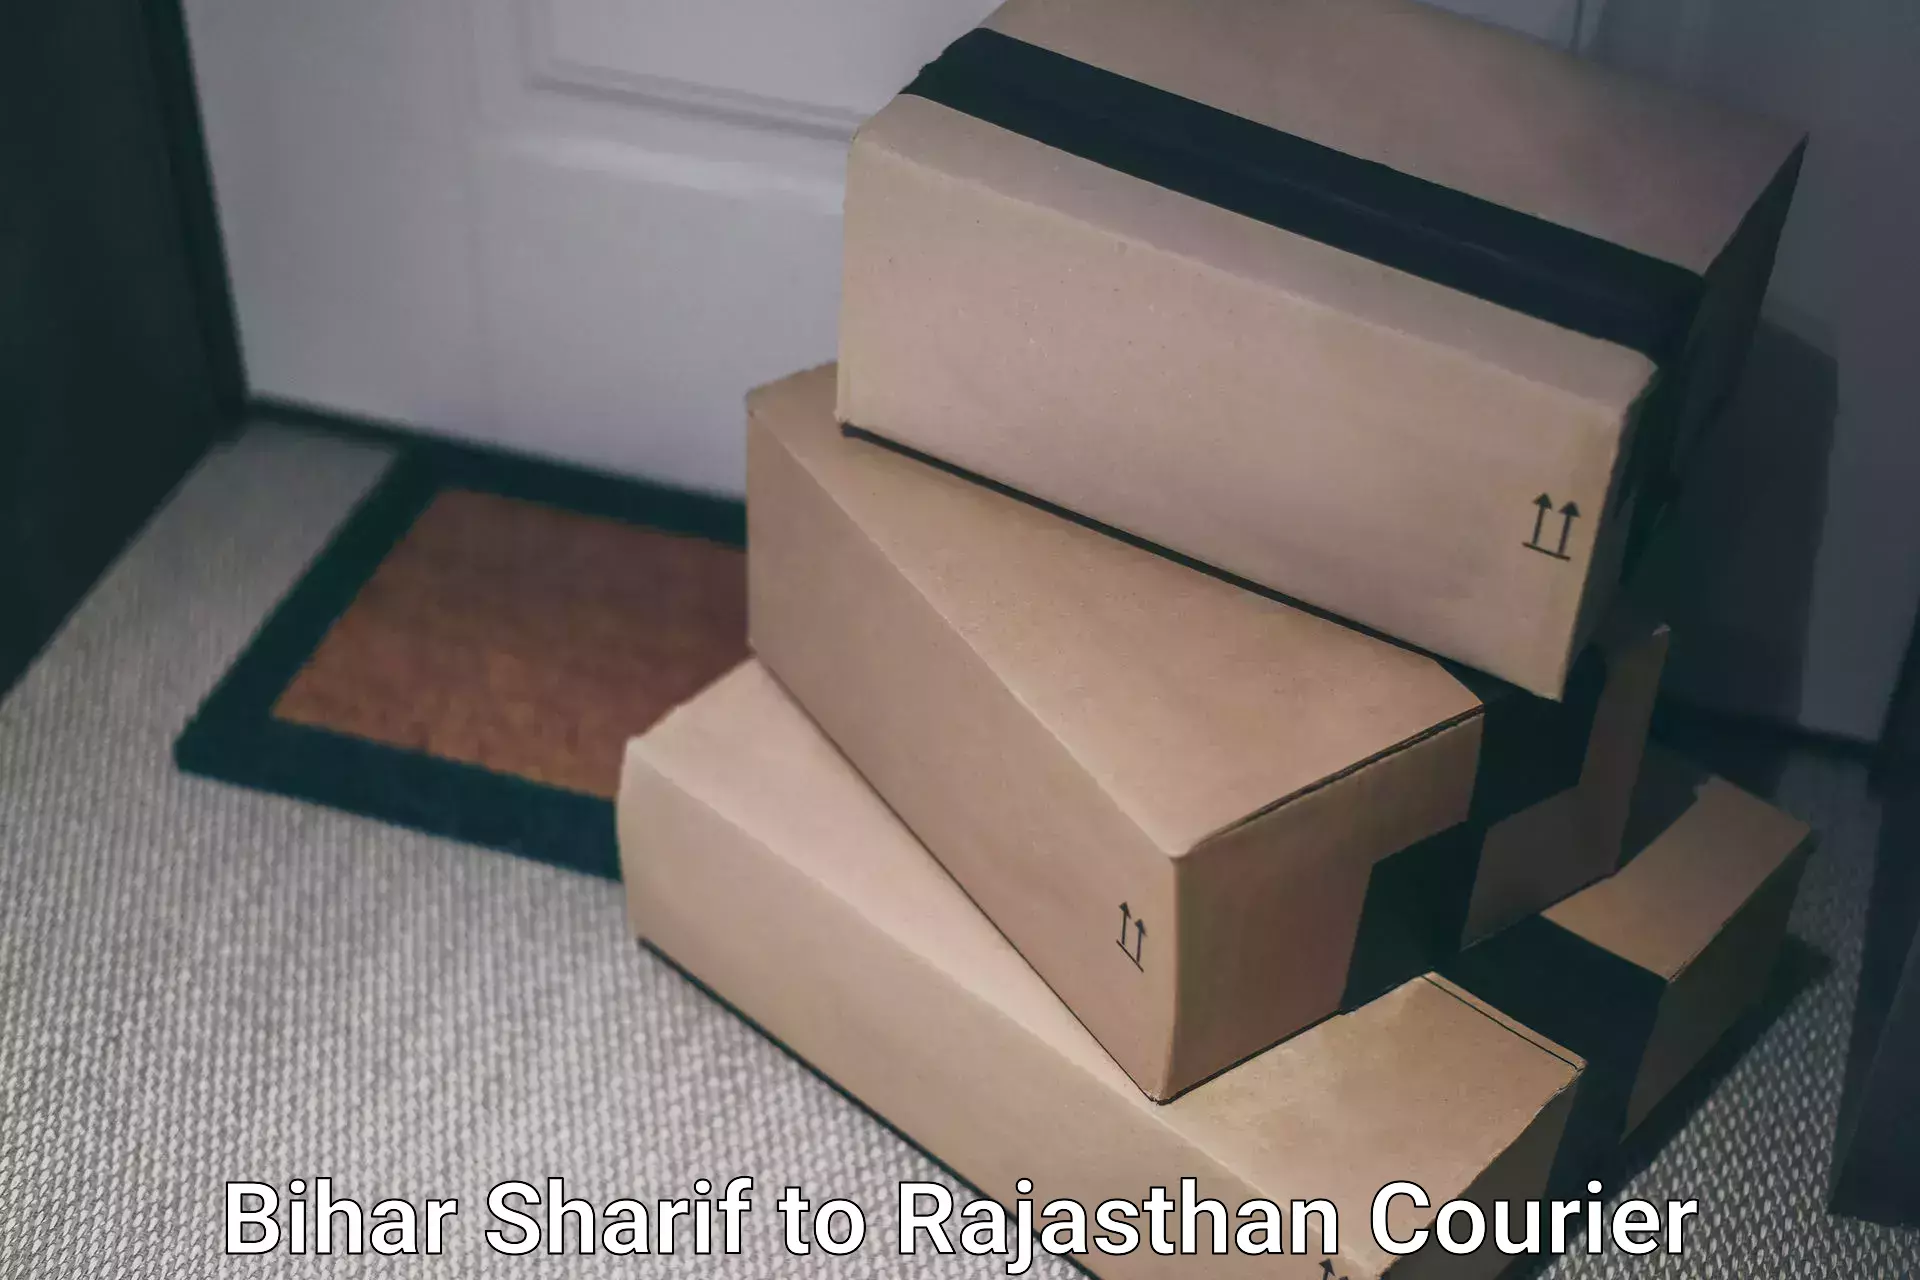 Comprehensive shipping network Bihar Sharif to Jaipur